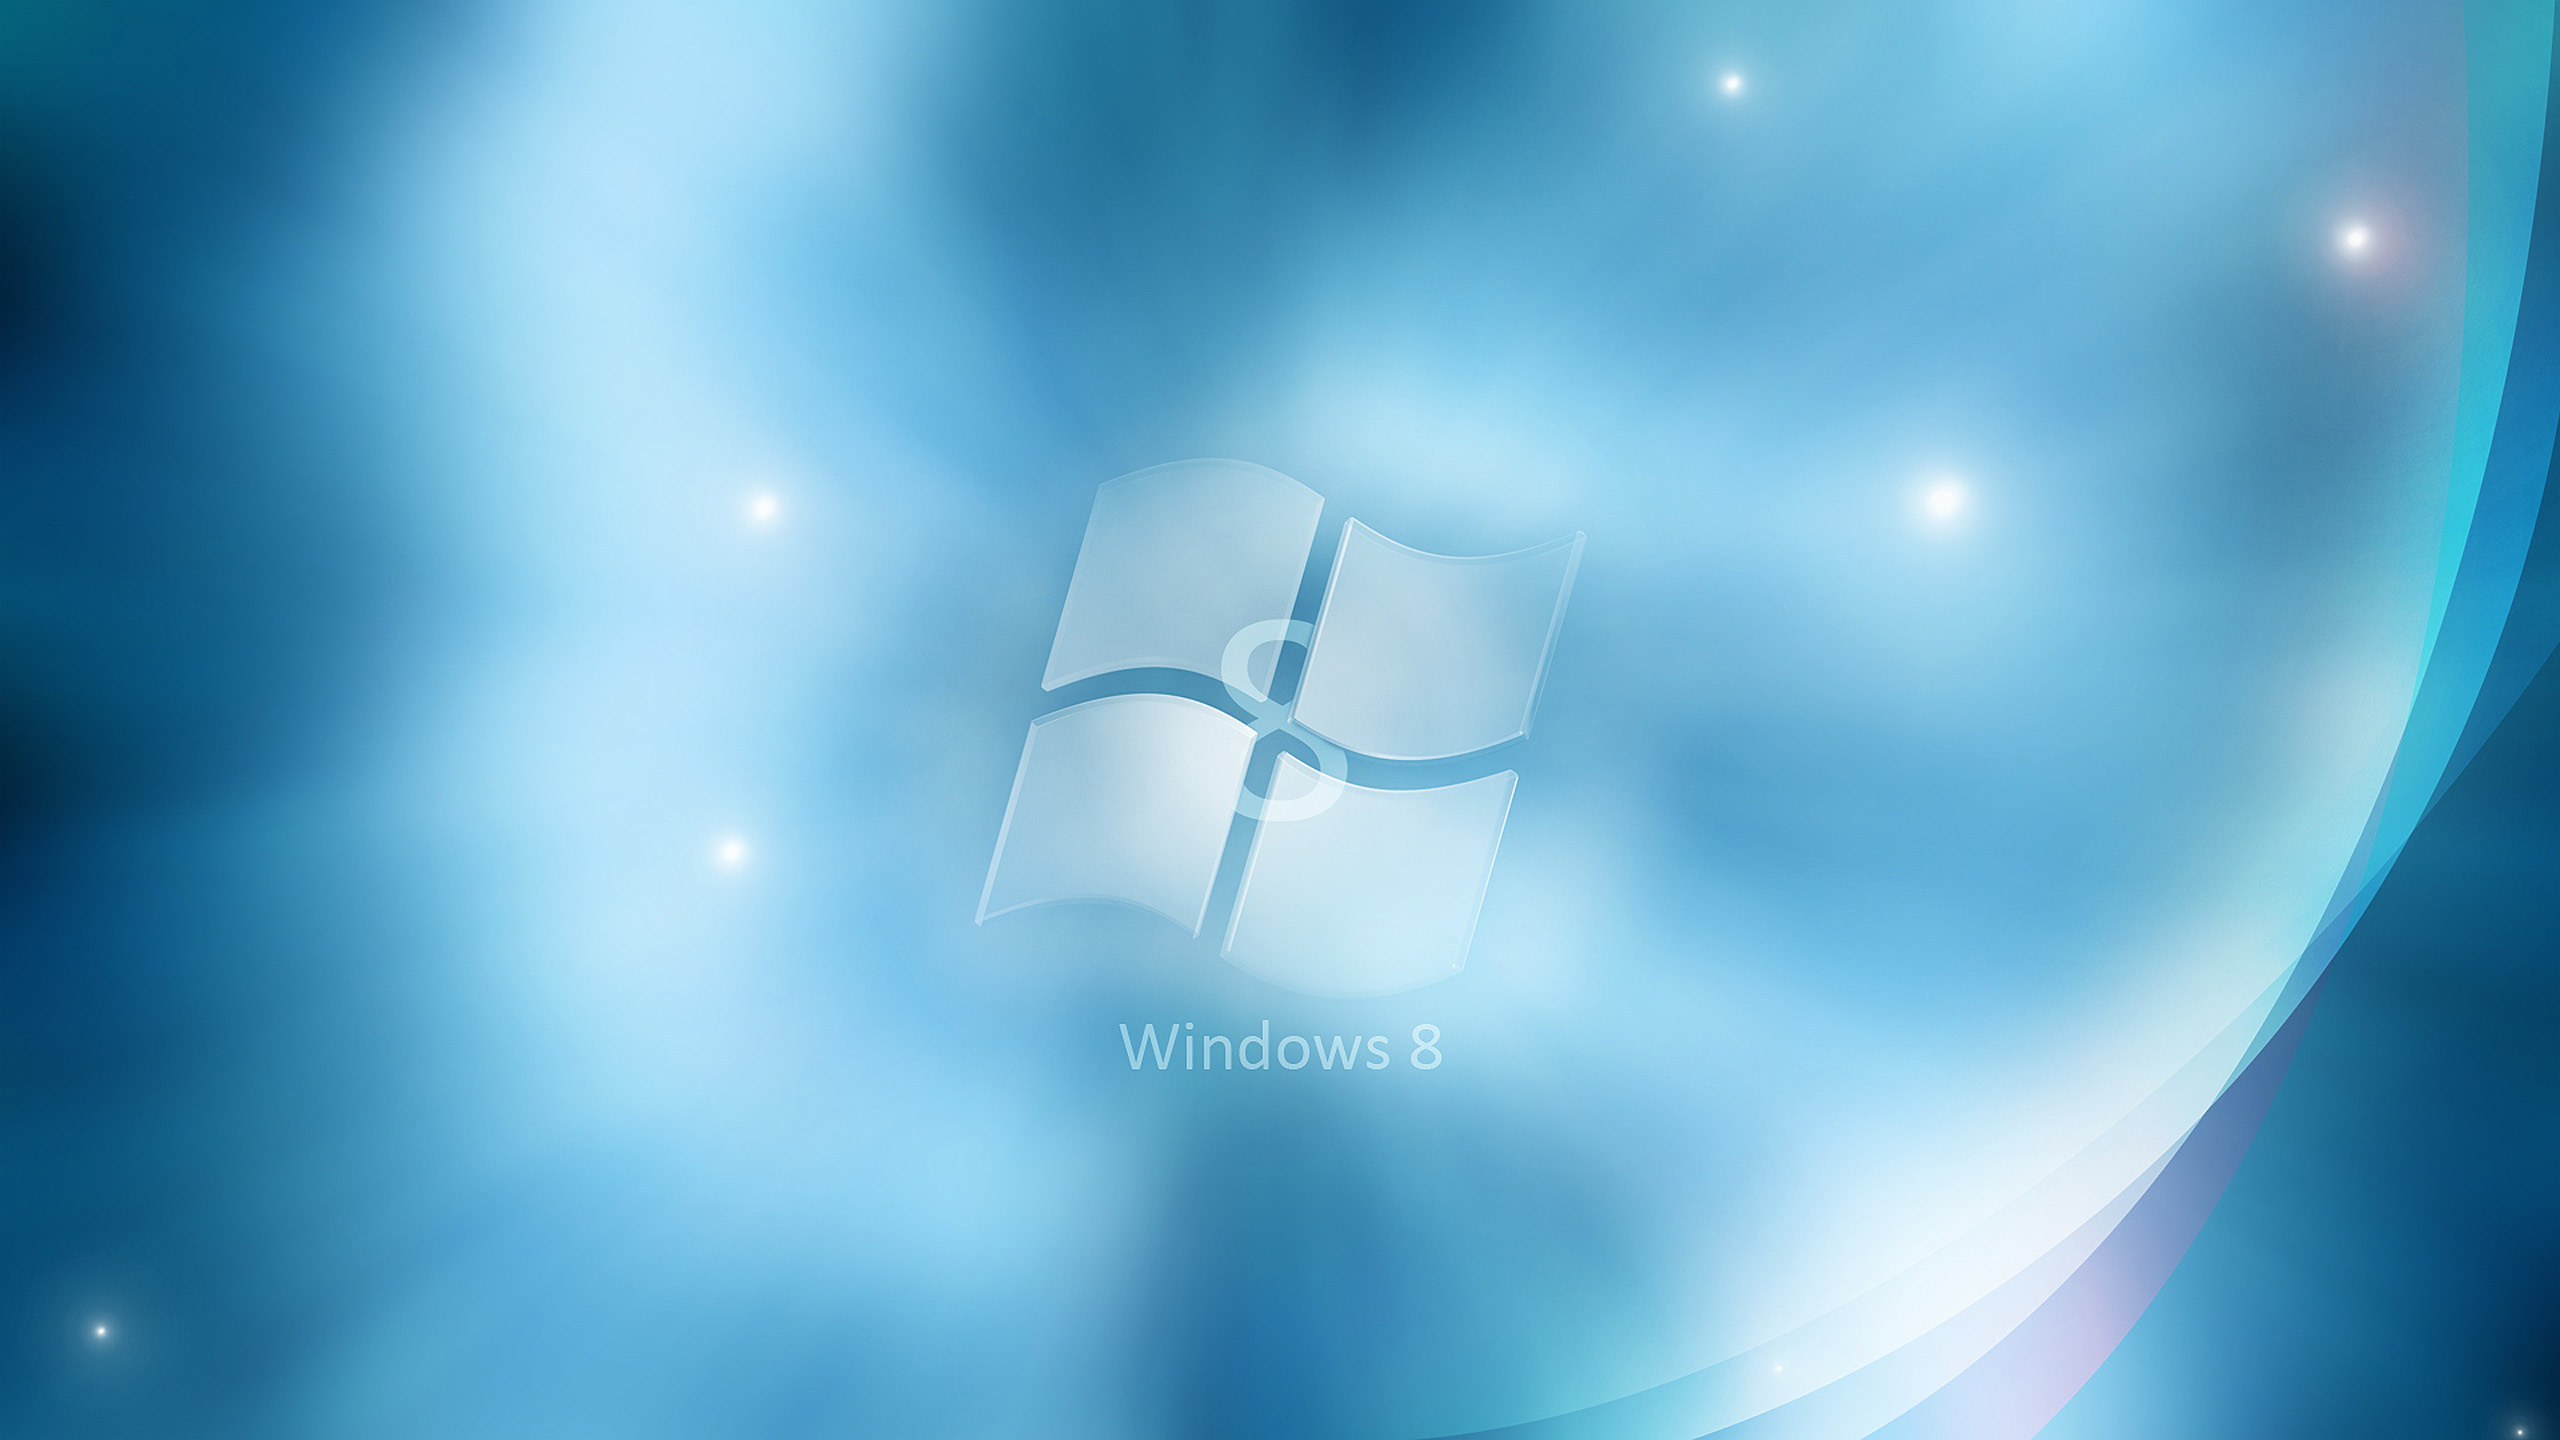 Windows 10 2560 X 1440 Wallpaper - WallpaperSafari2560 x 1440